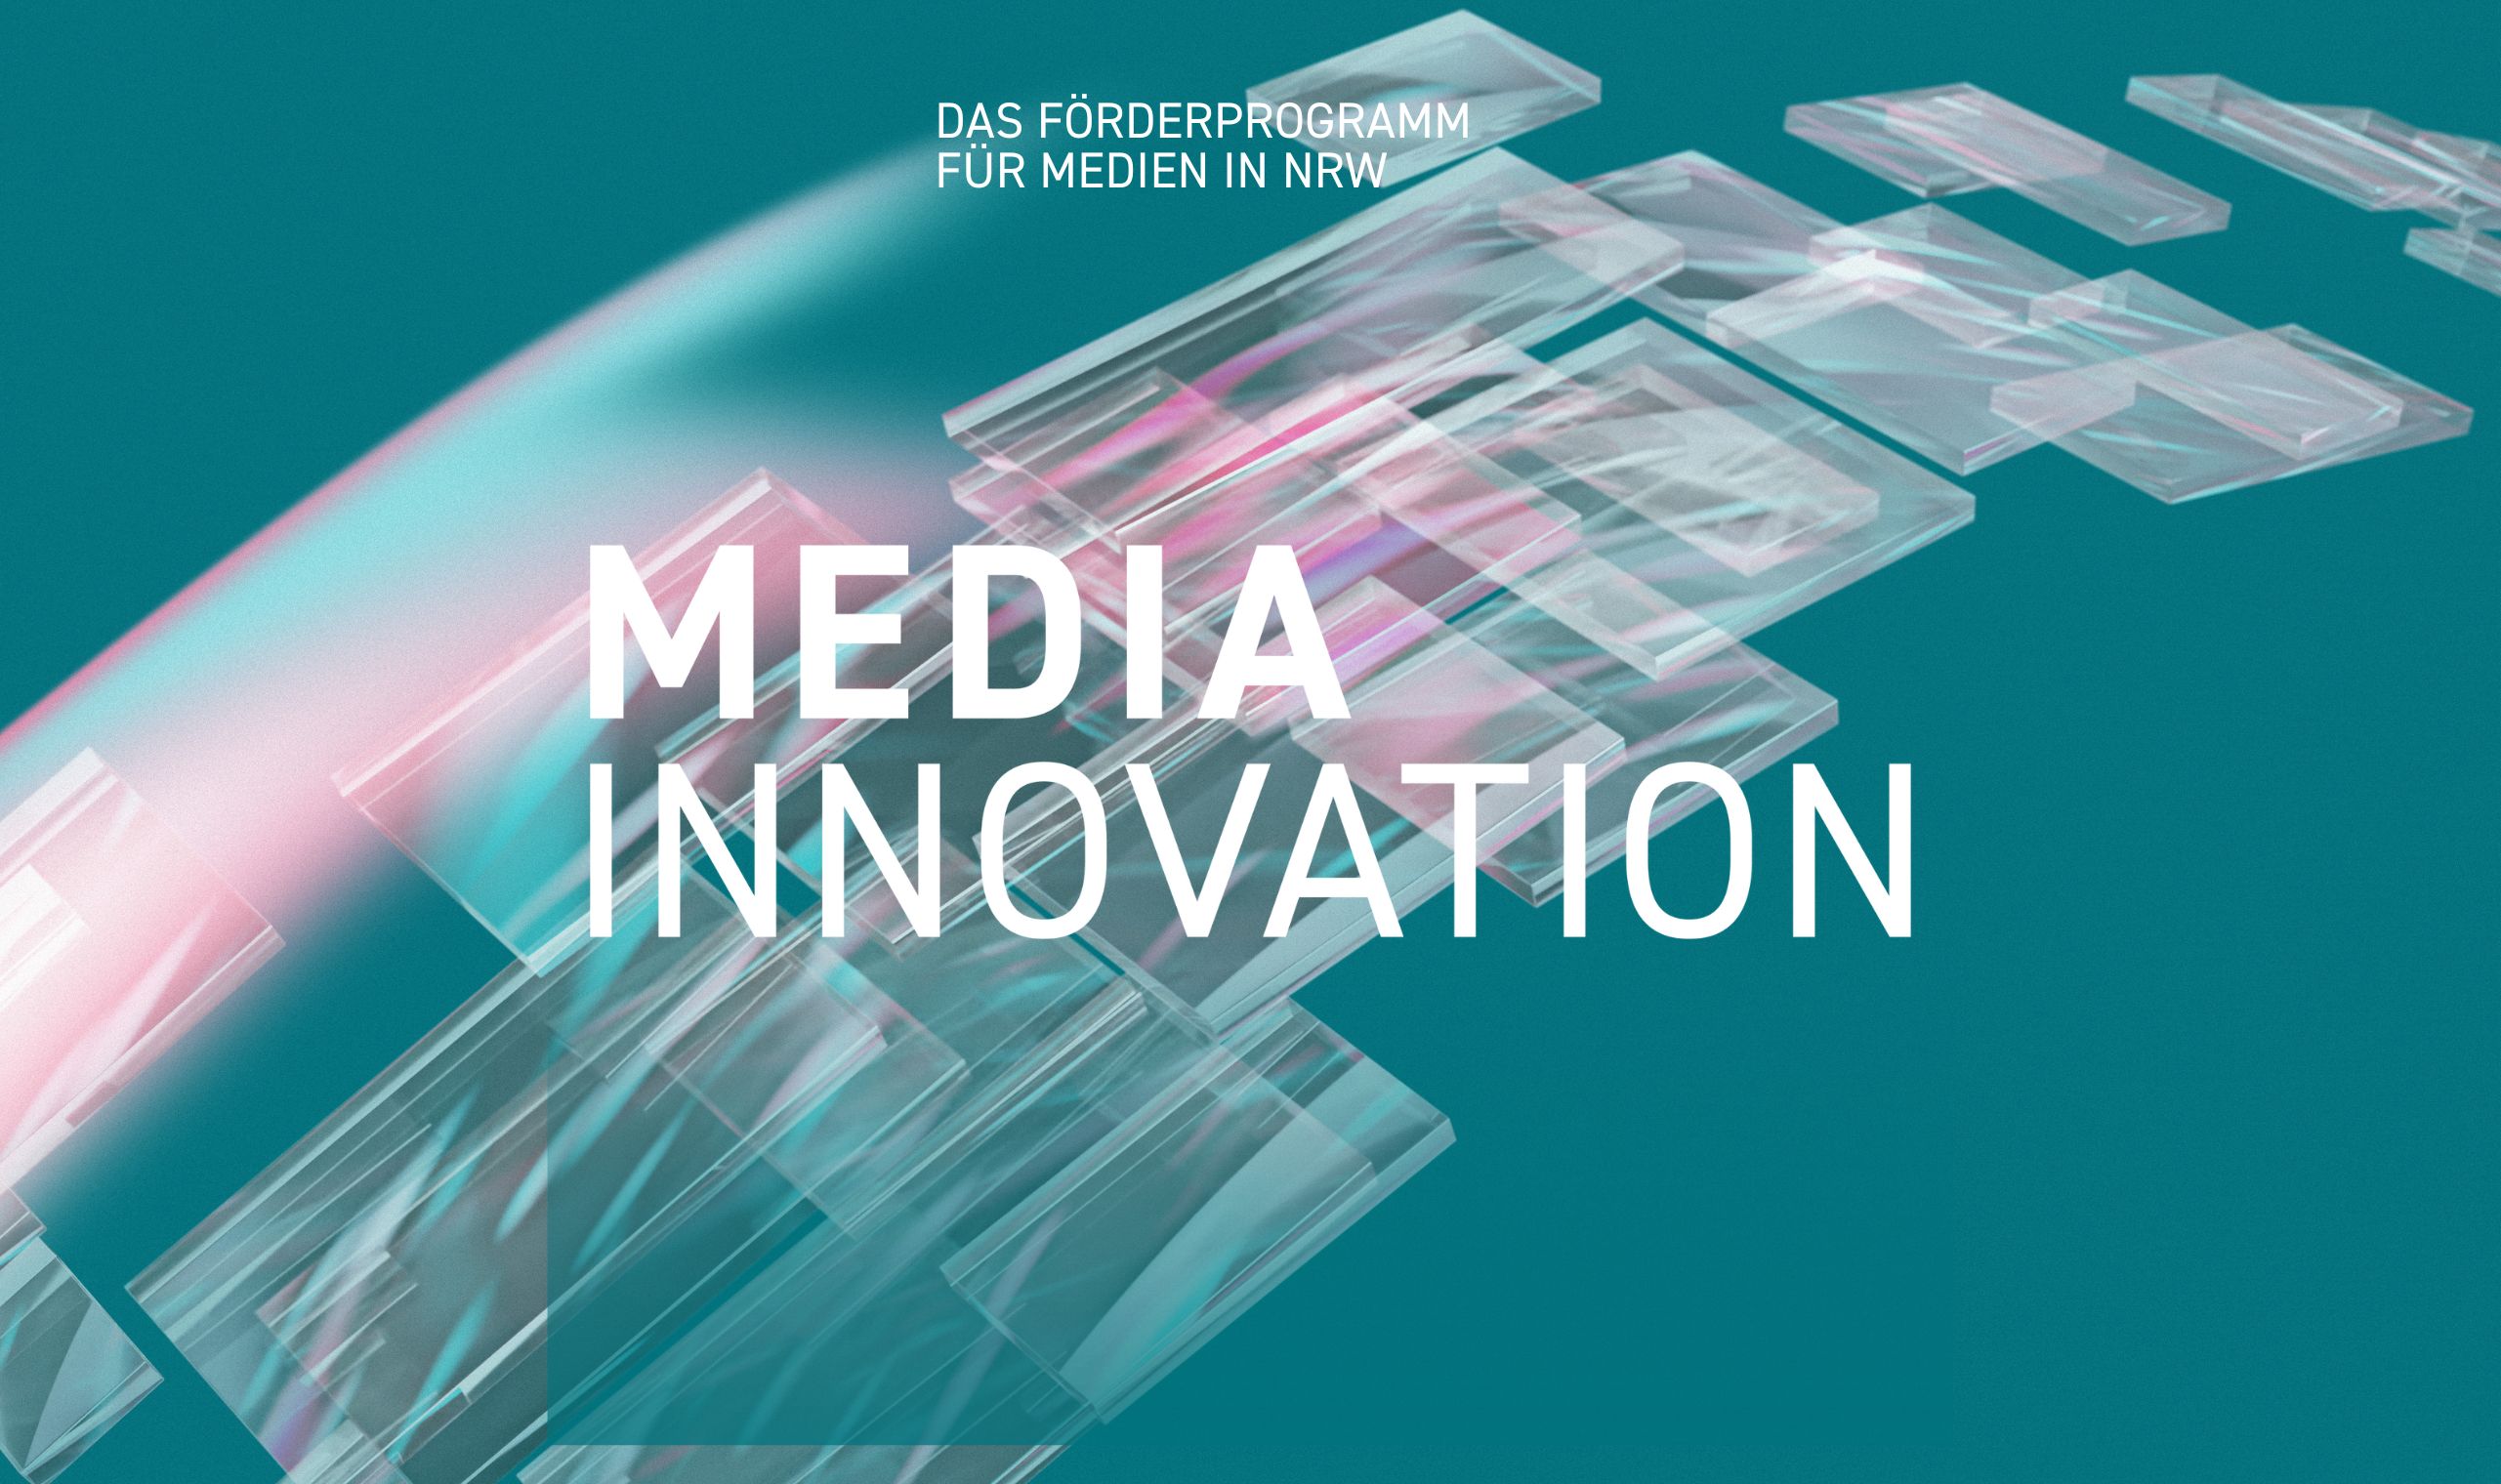 KI und Prozessoptimierung im Fokus: neue Projekte im Media Innovation Programm